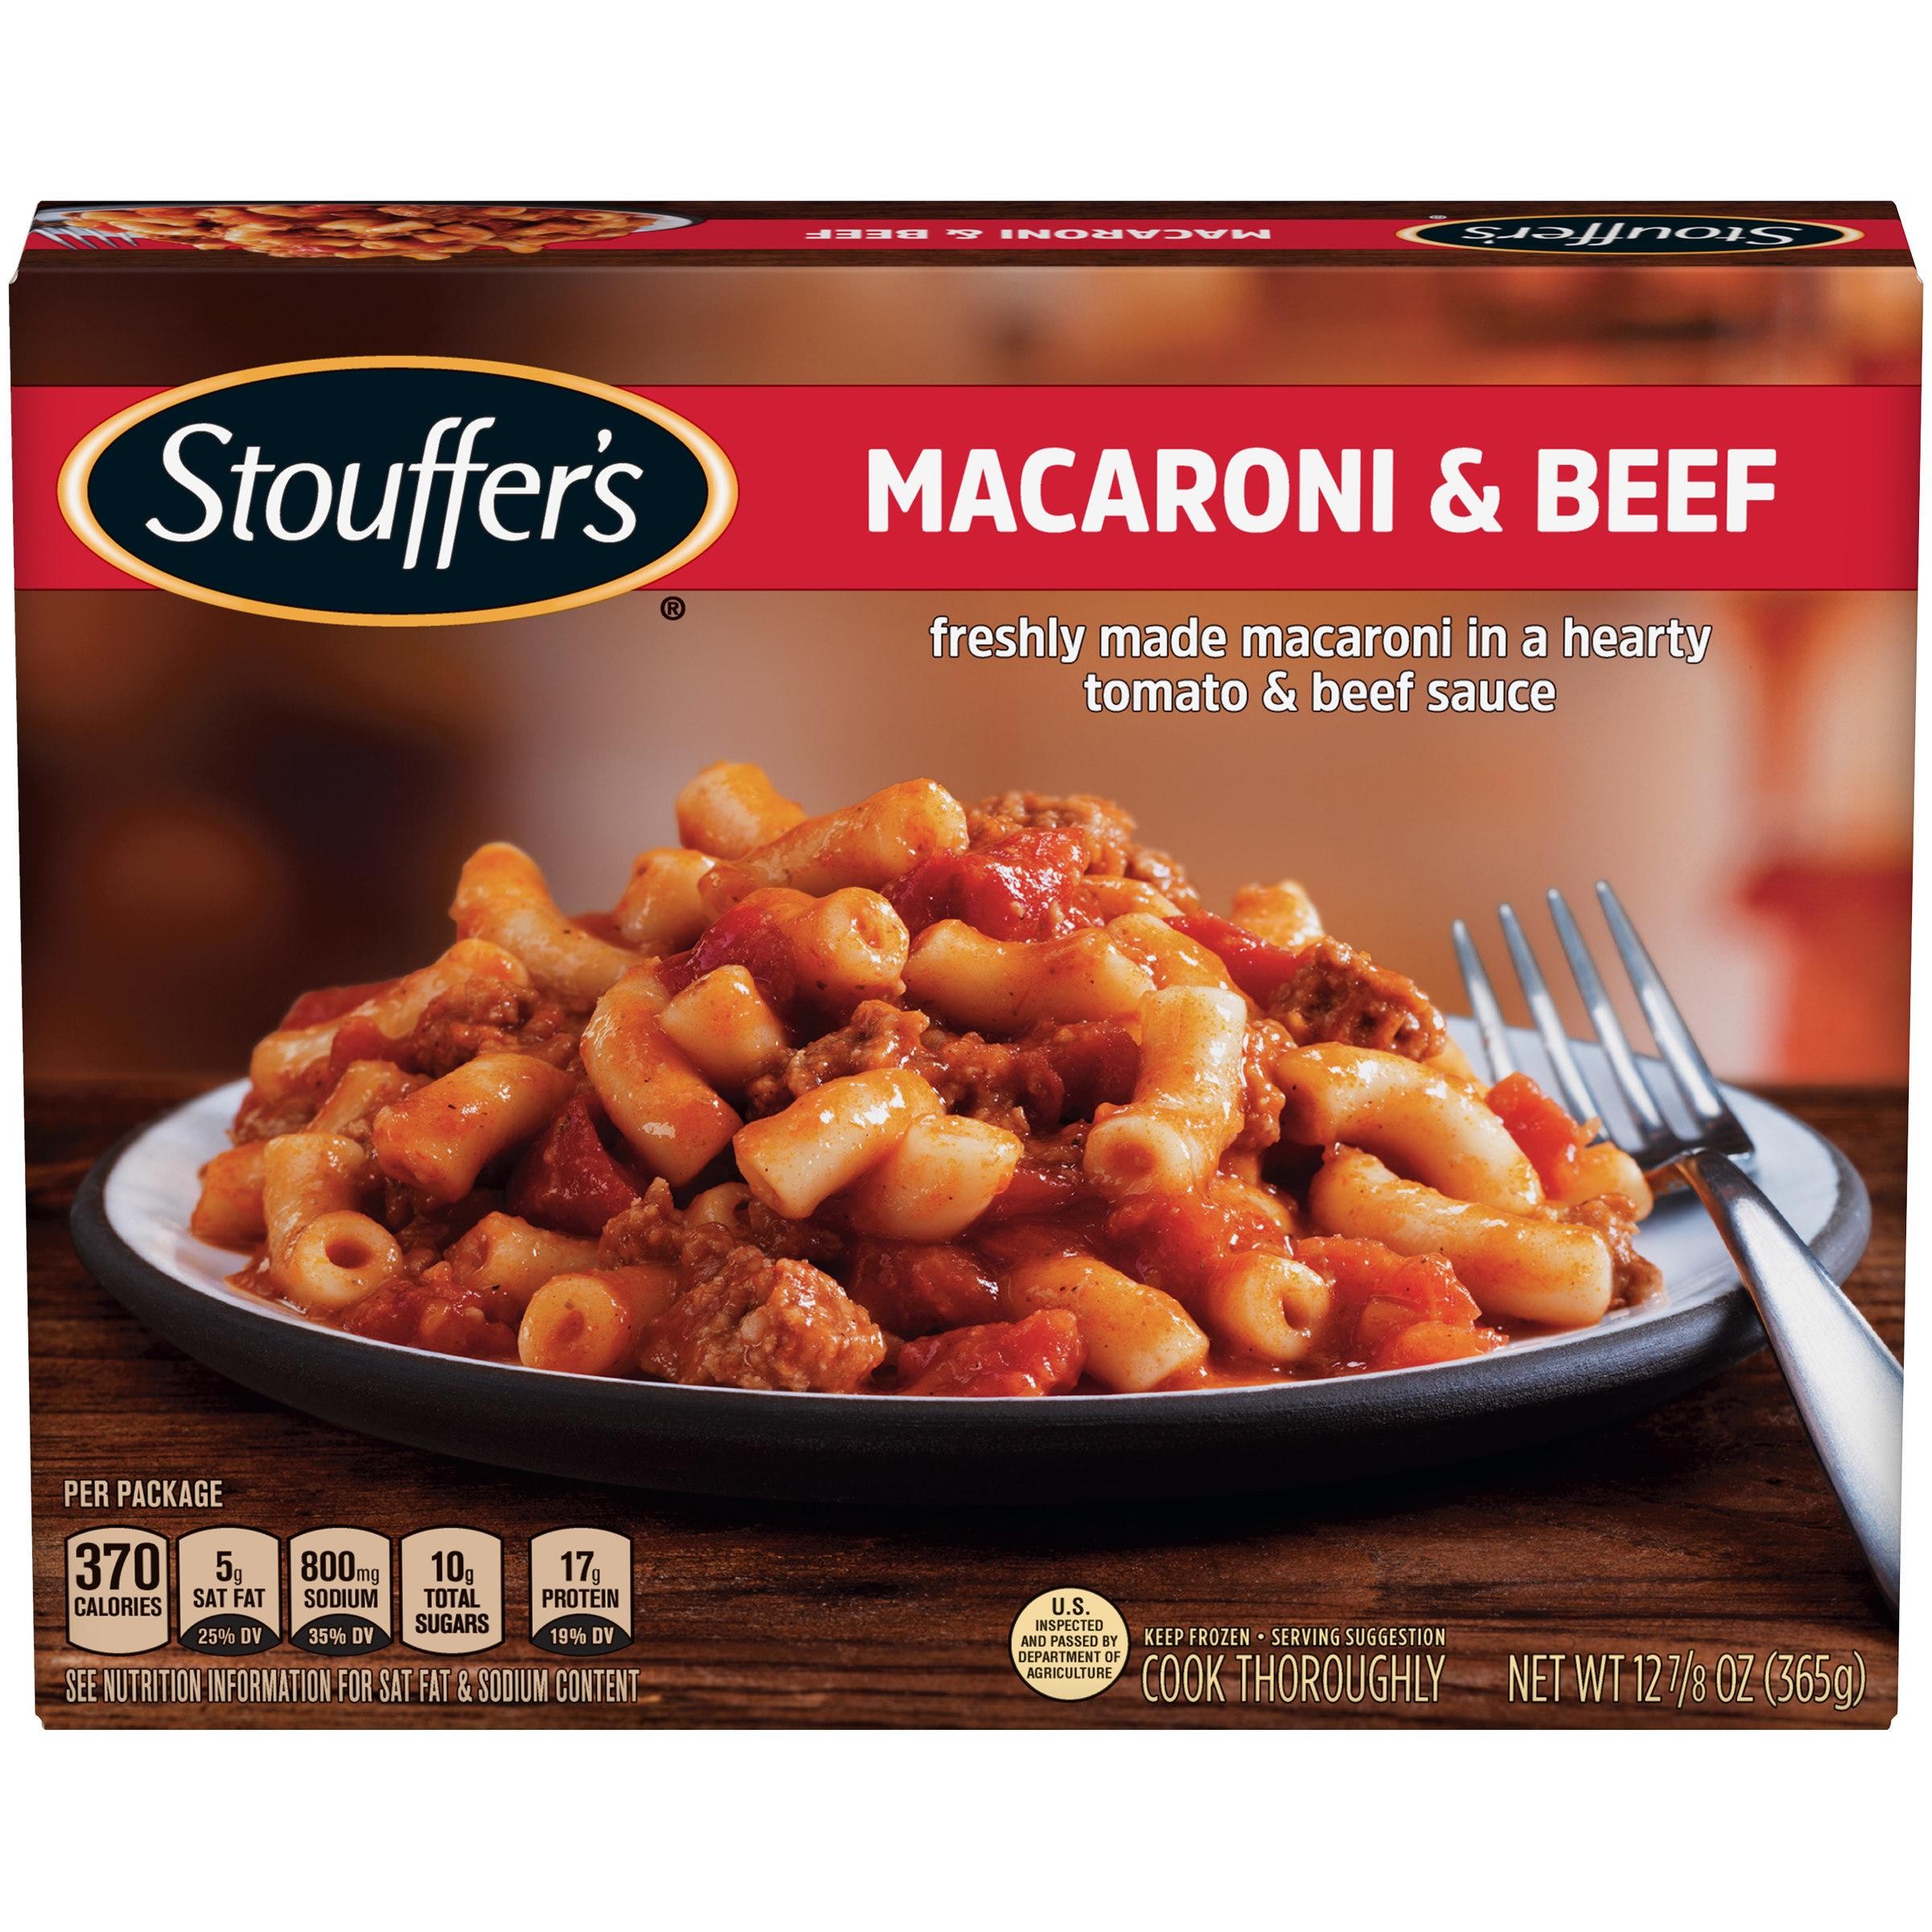 Macaroni & Beef Freshly Made Macaroni in a Hearty Tomato & Beef Sauce